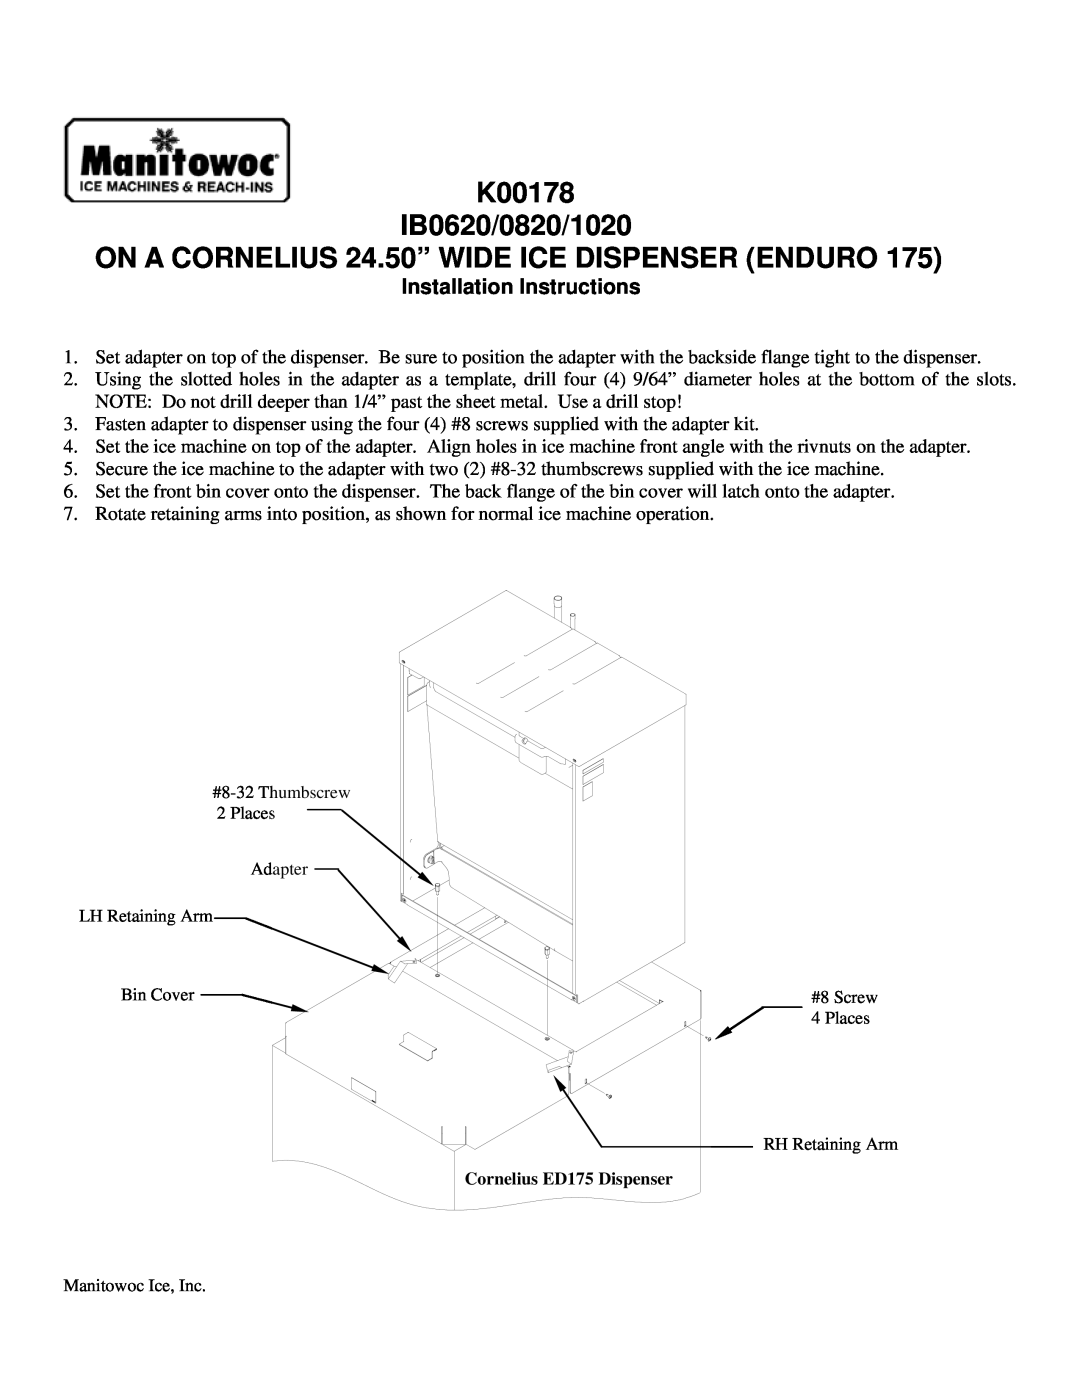 Manitowoc Ice IB01020 installation instructions K00178 IB0620/0820/1020, ON A CORNELIUS 24.50” WIDE ICE DISPENSER ENDURO 